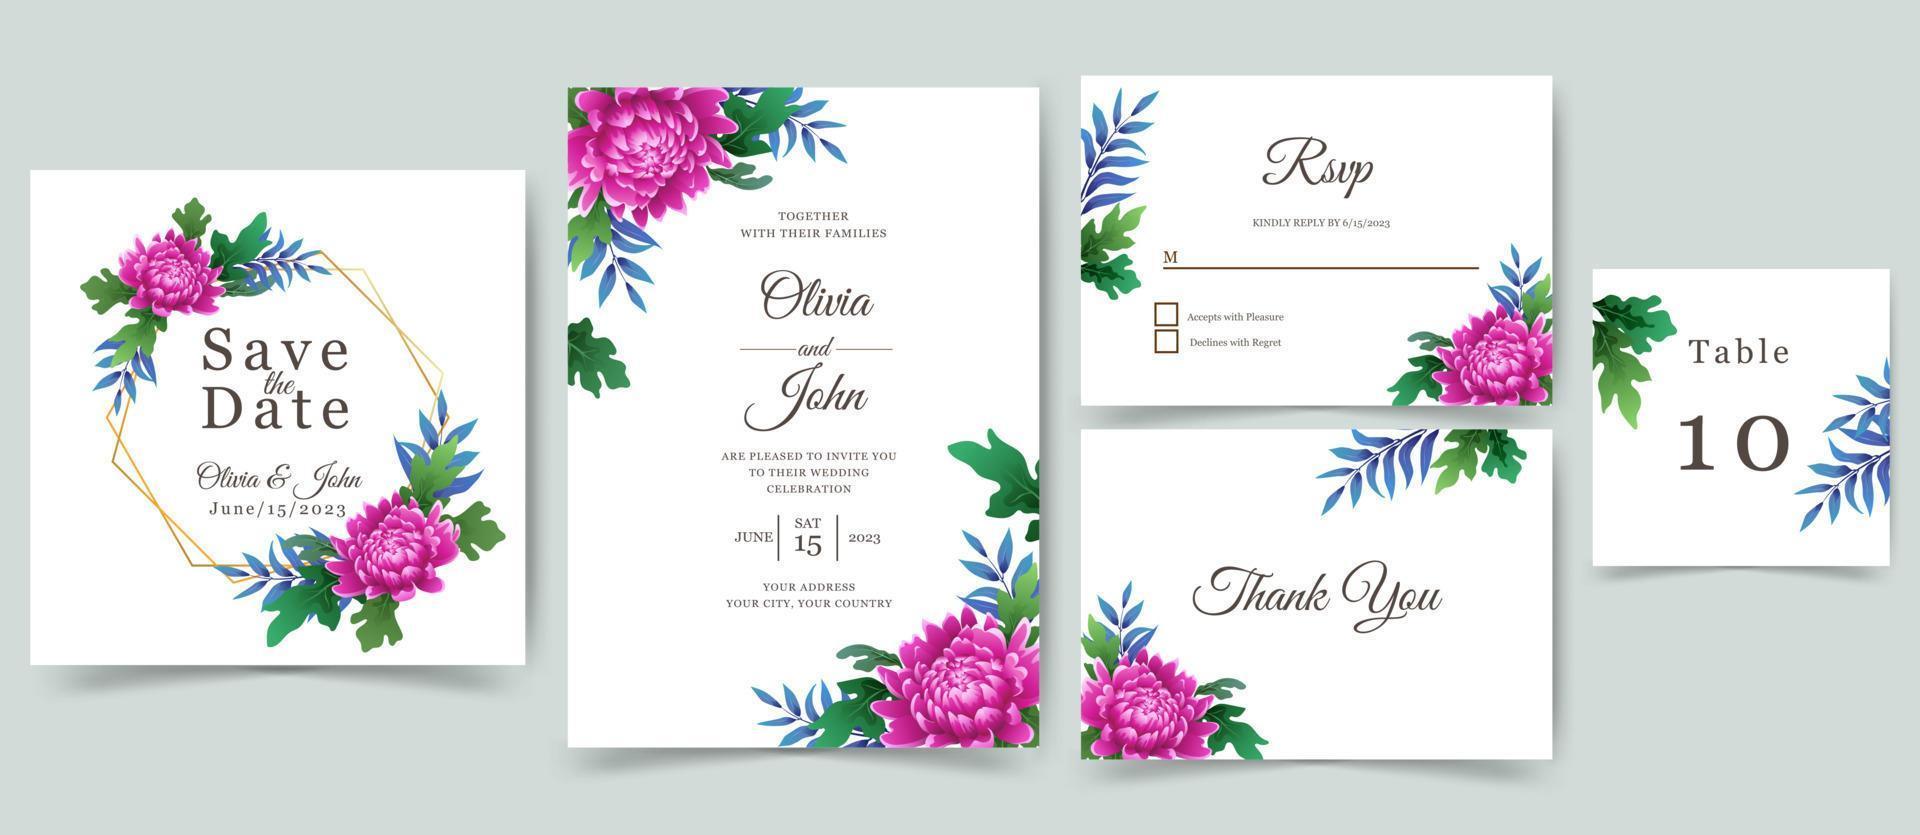 invitación de boda o tarjeta de felicitación con hermoso diseño de flores. vector